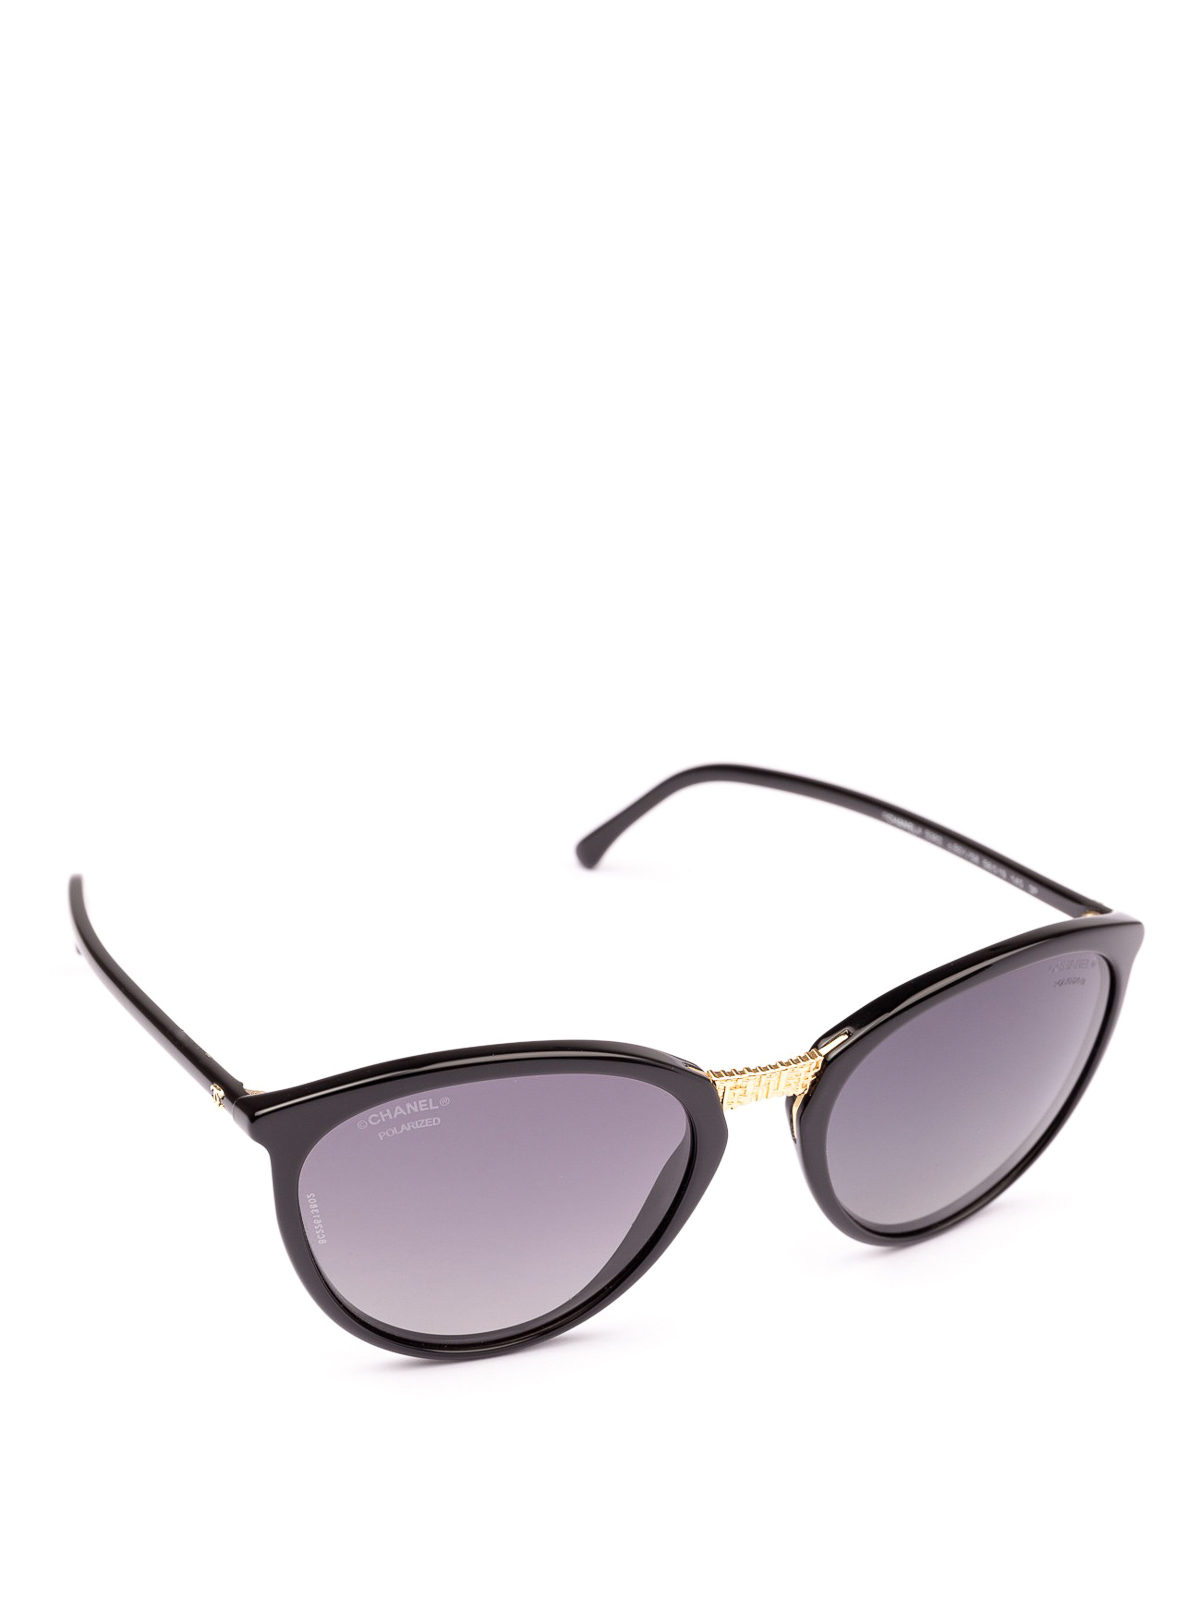 Sunglasses Shield Sunglasses acetate  metal  Fashion  CHANEL